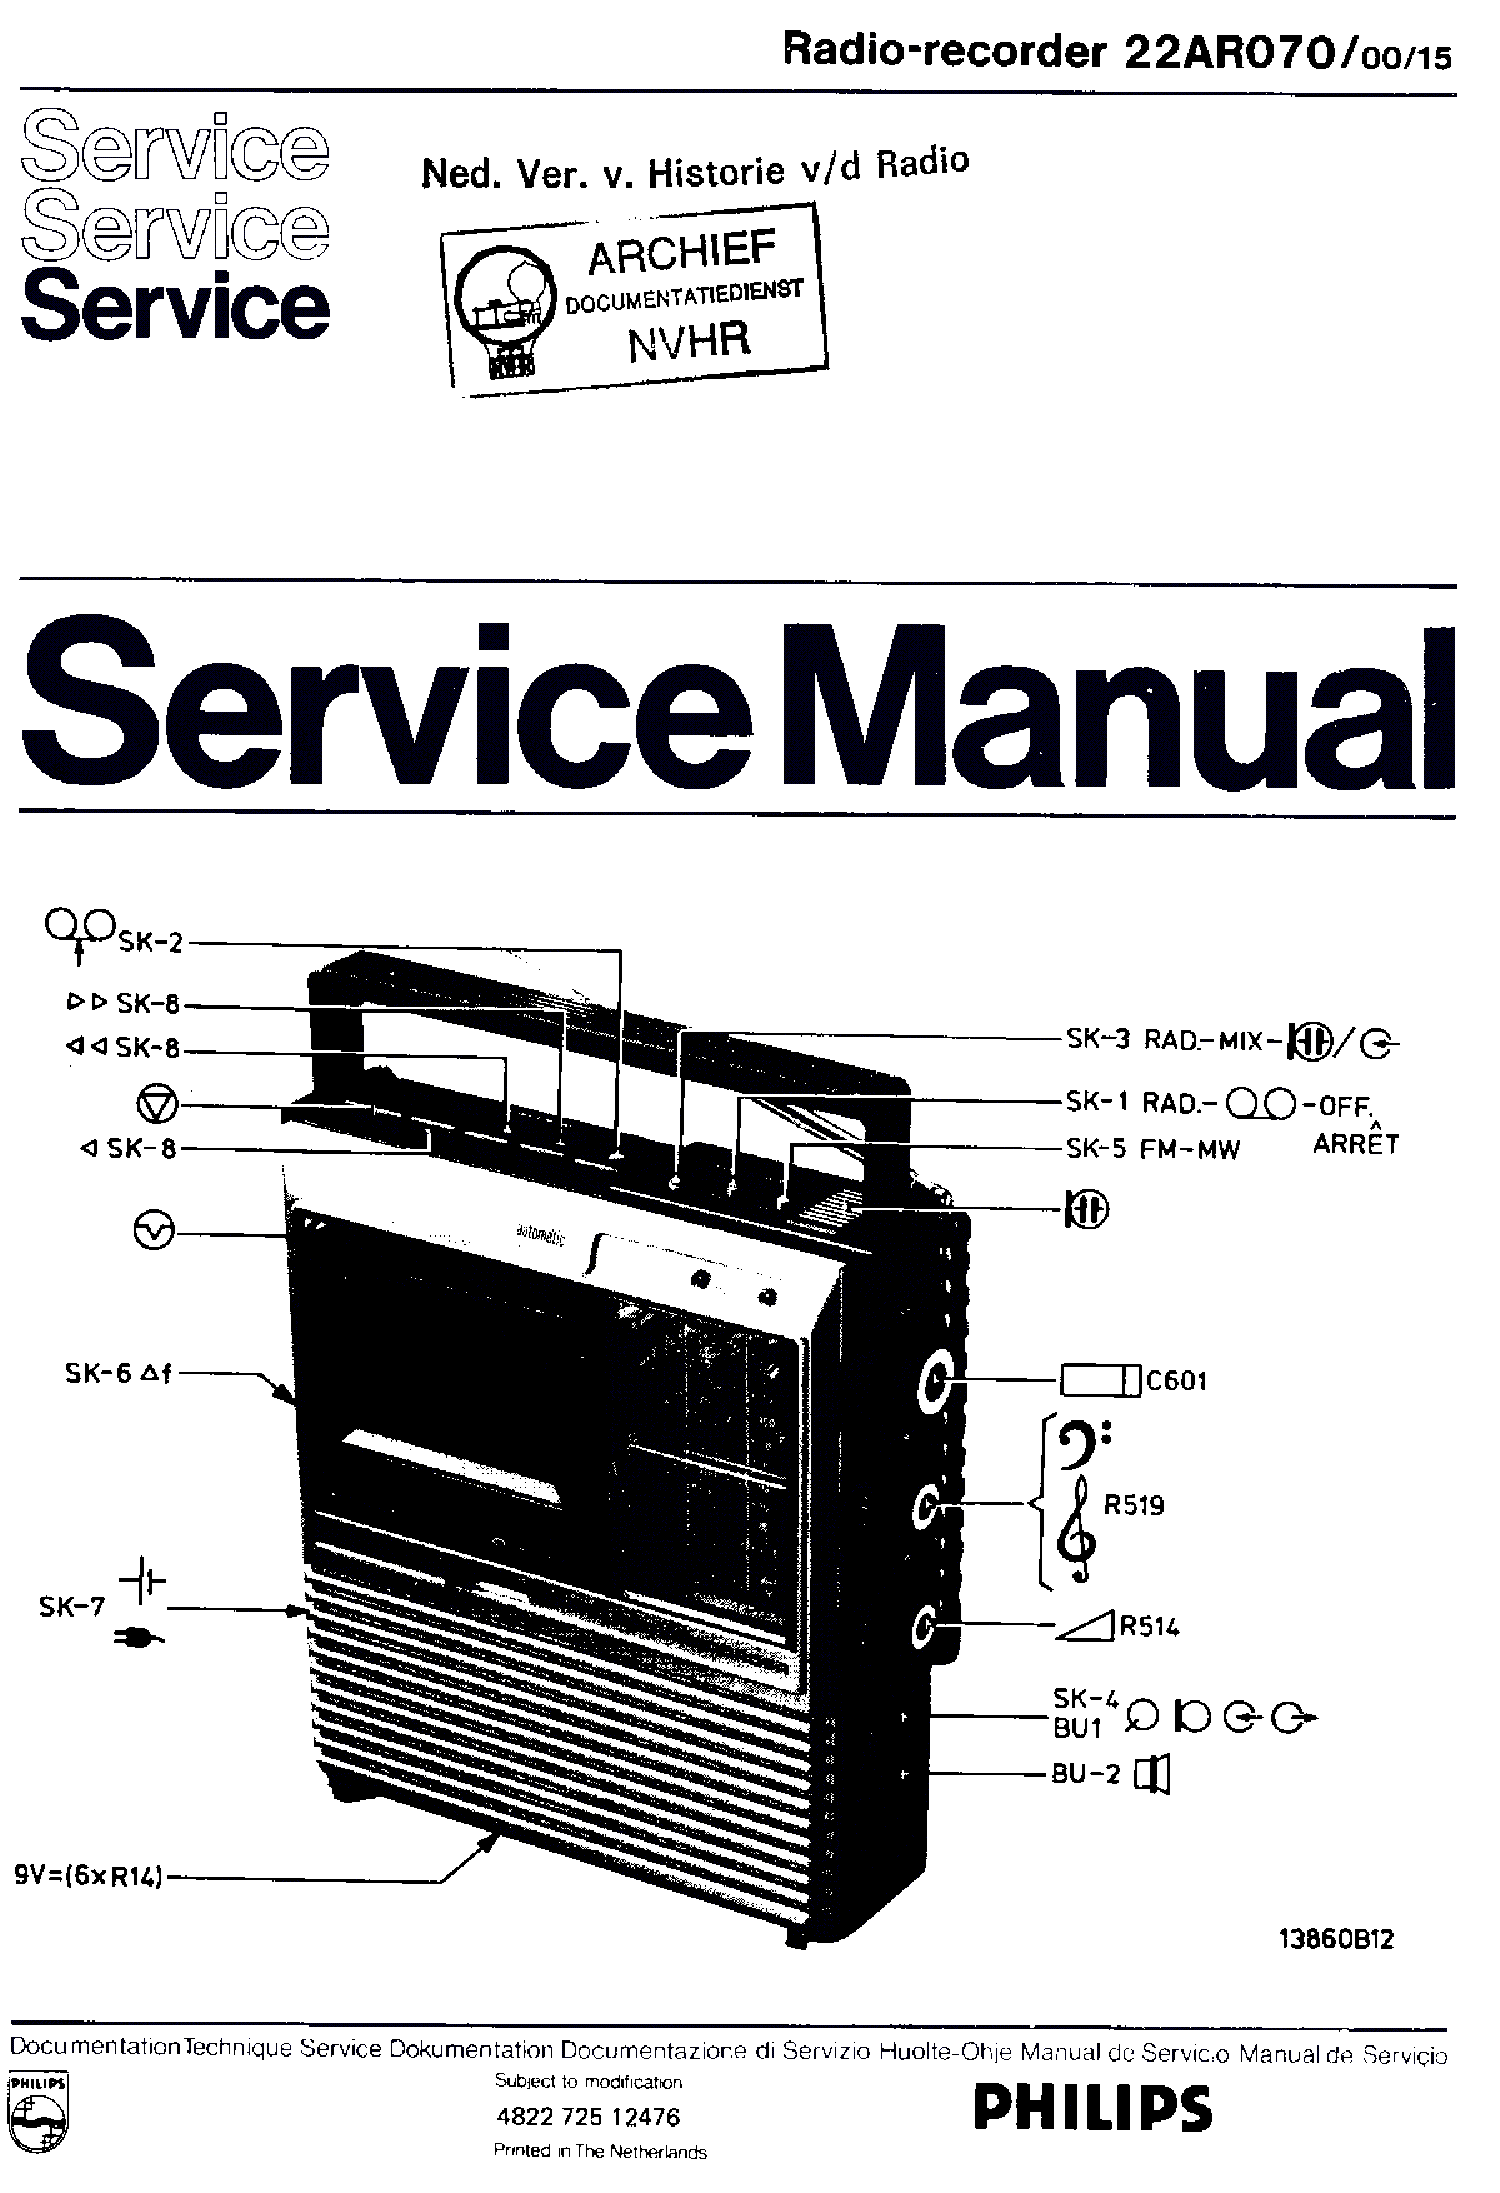 PHILIPS 22AR070-00-15 PORTABLE RADIO RECORDER SM service manual (1st page)